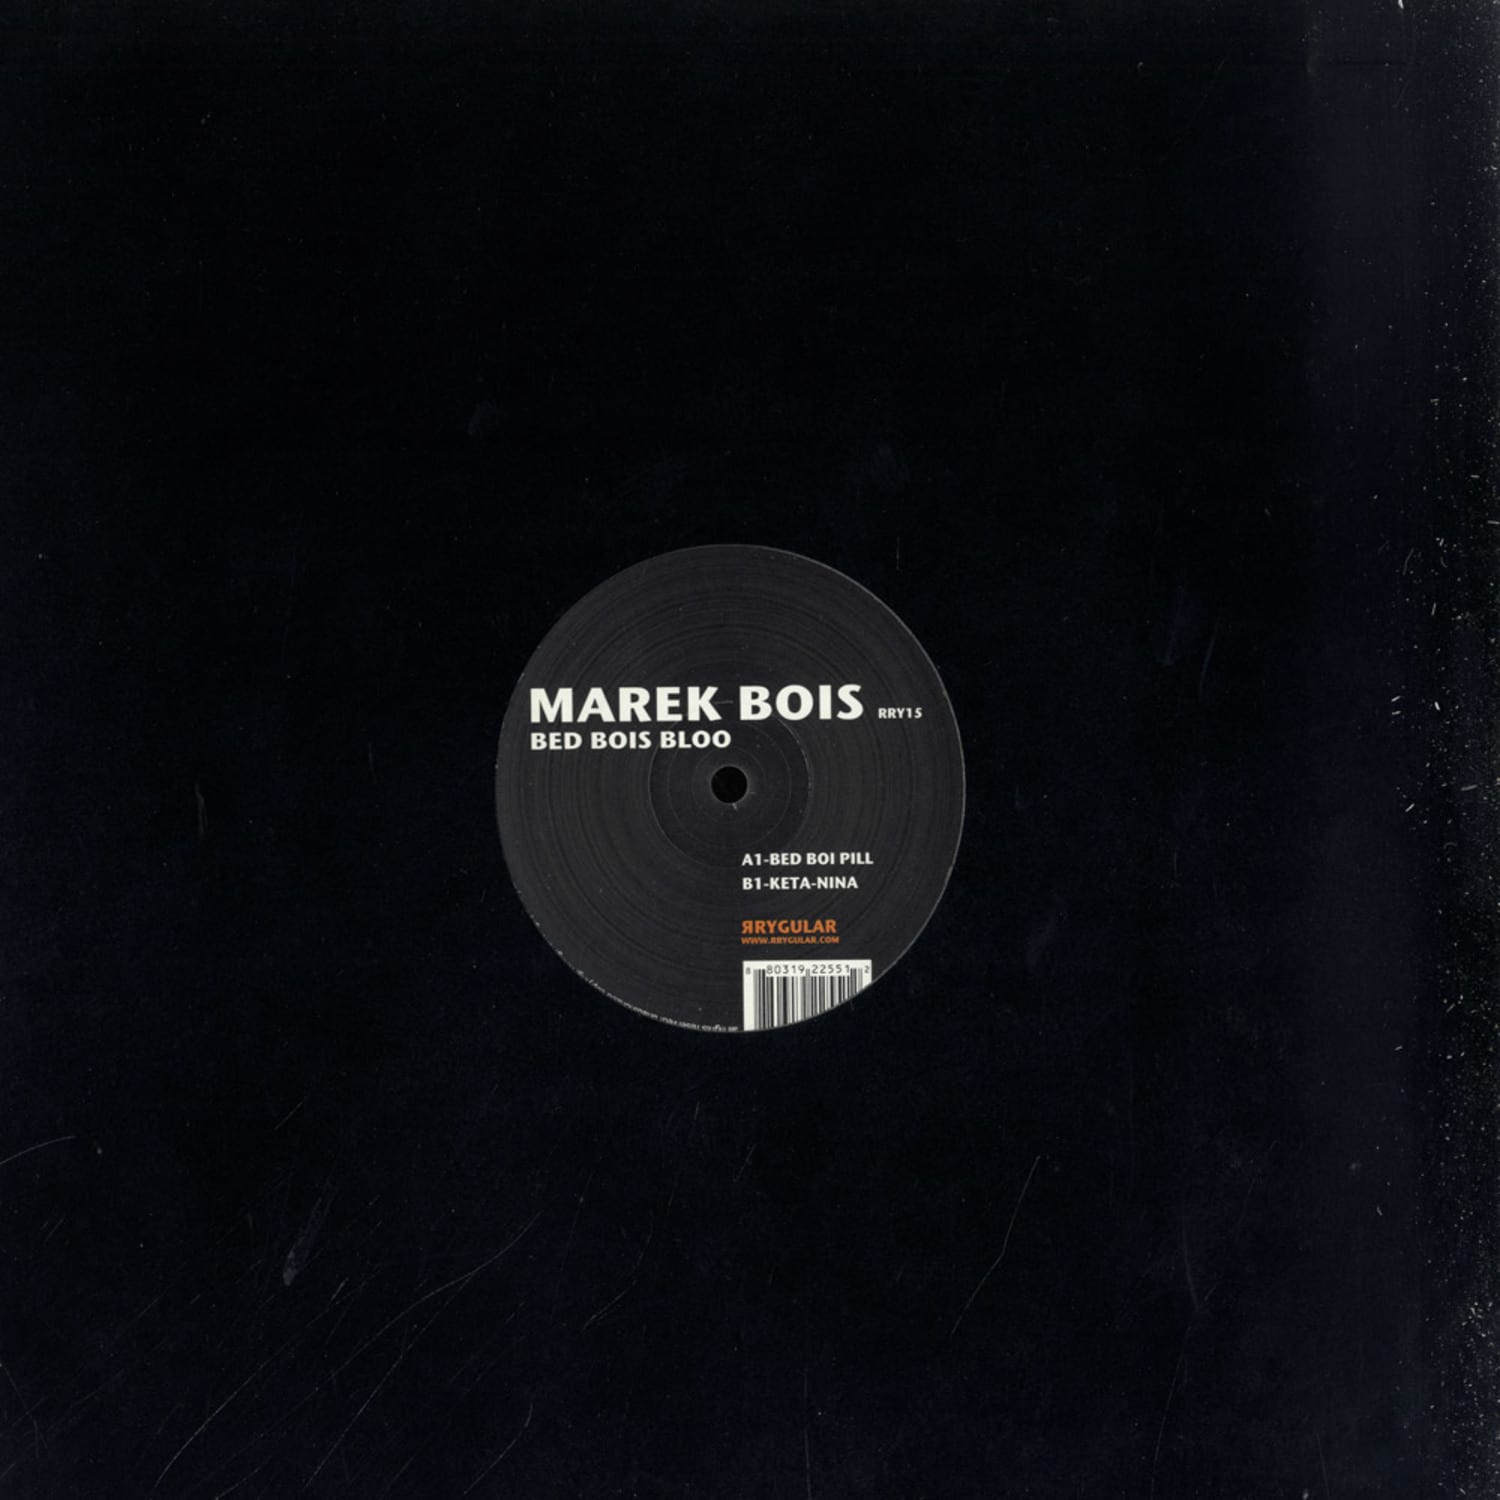 Marek Bois - BED BOIS BLOO